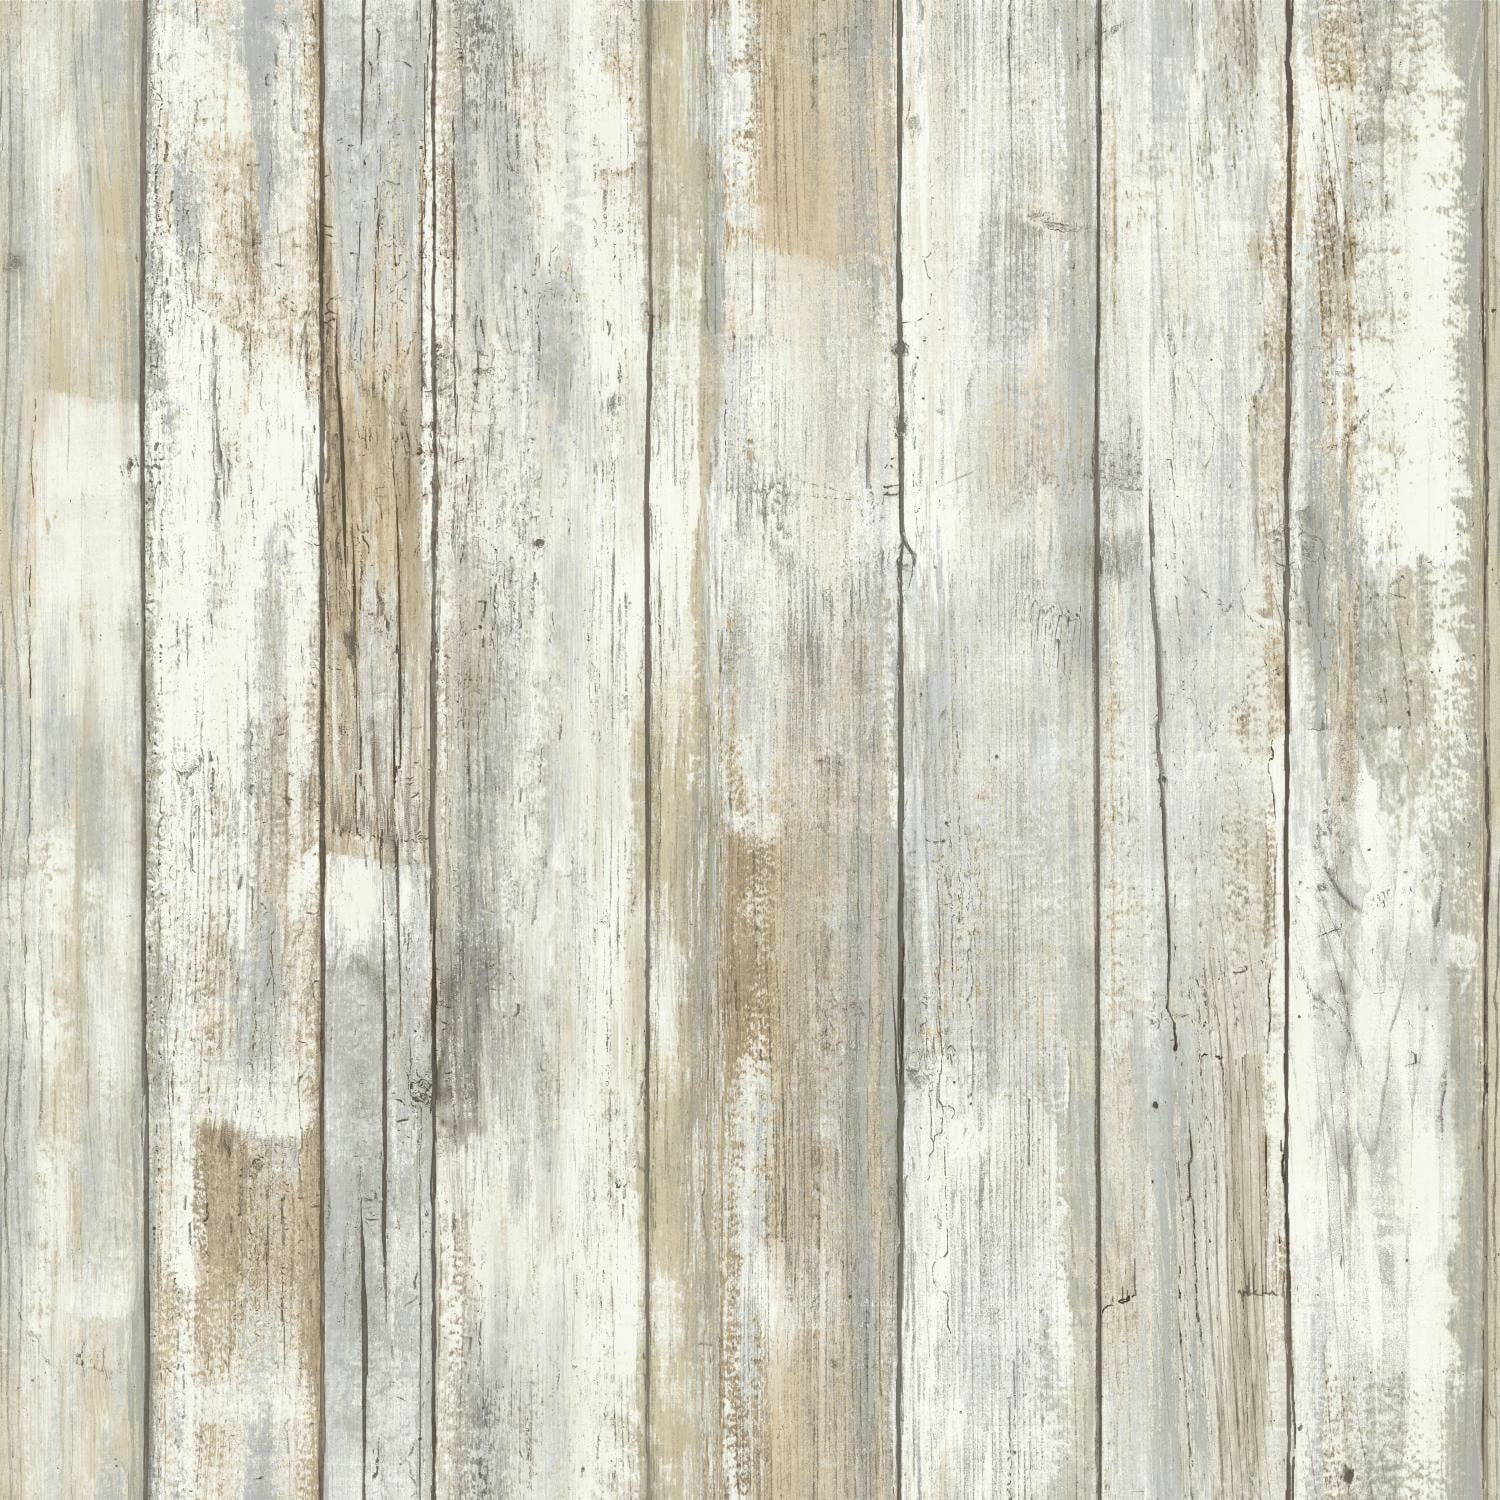 RoomMates Tan Woodplank Peel and Stick Wallpaper